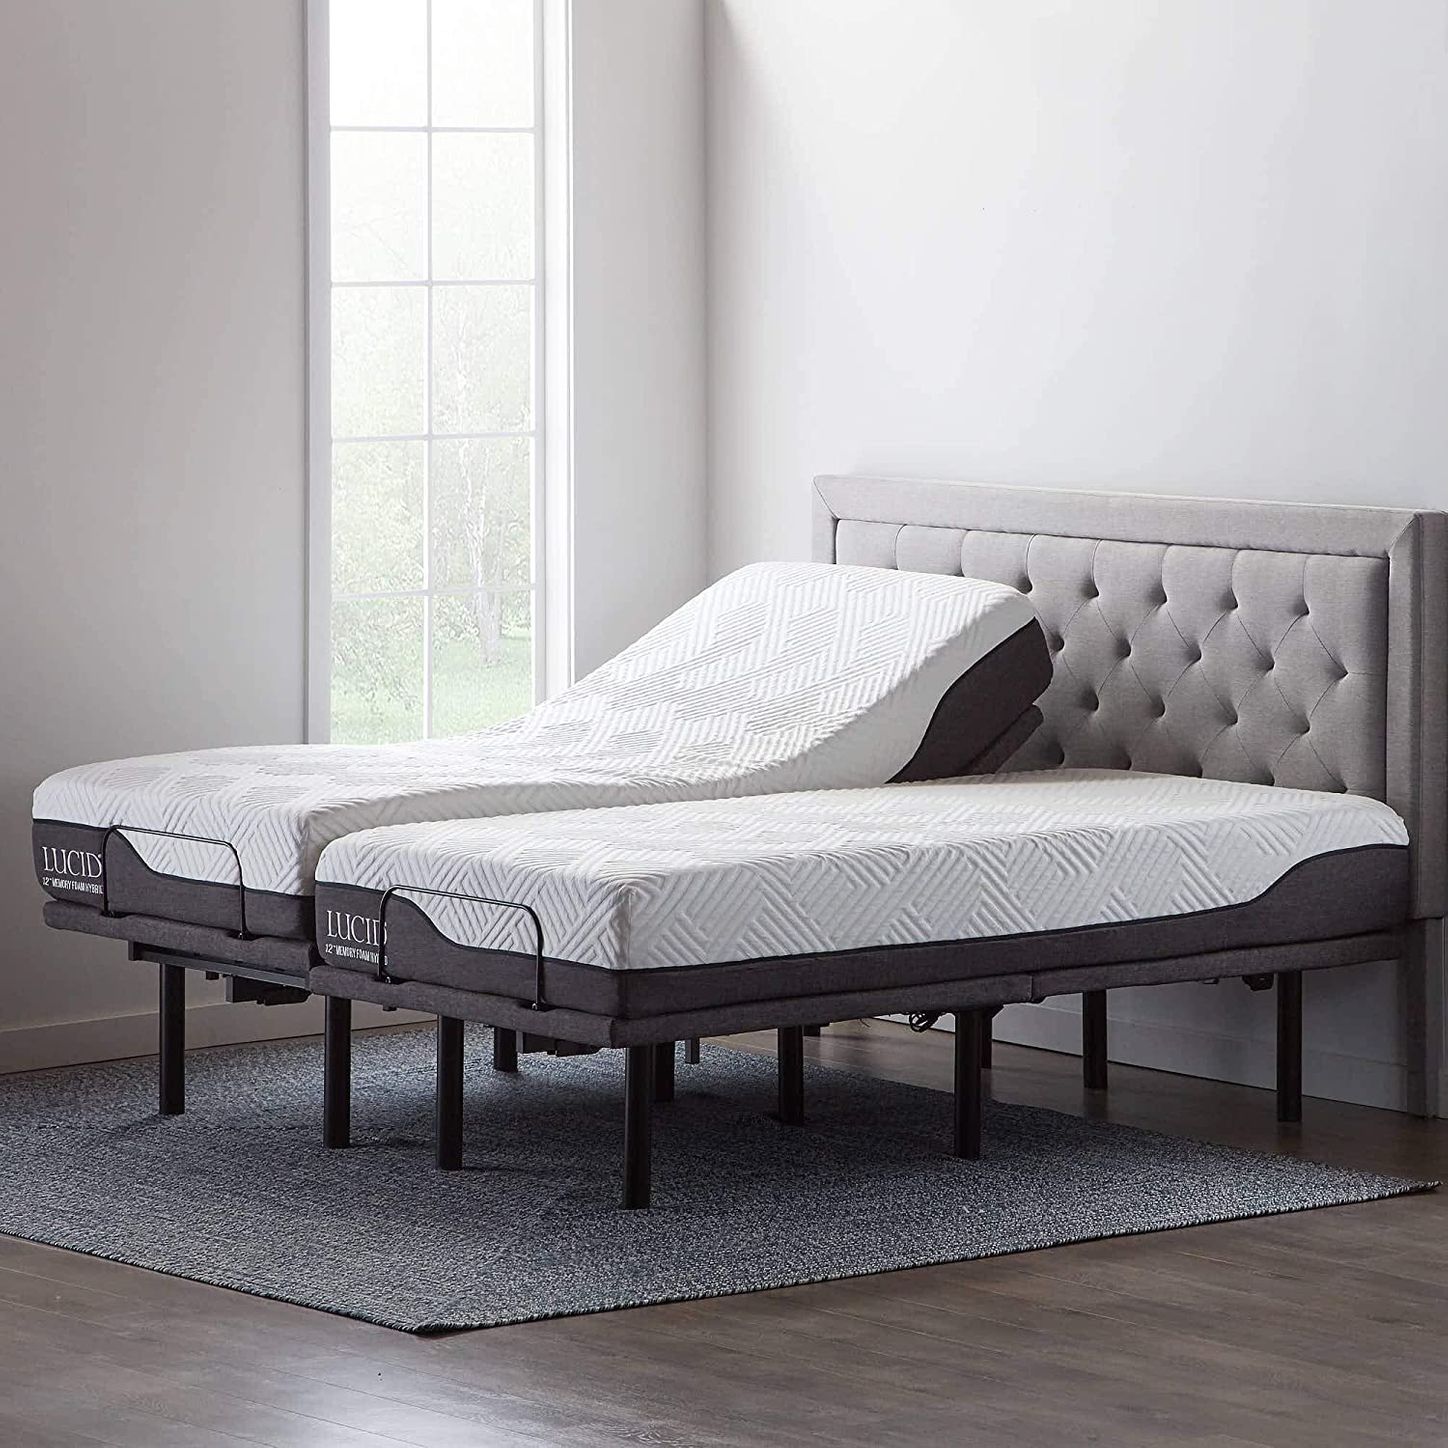 10 Best Adjustable Bed Bases 2021 The, Do Adjustable Beds Need Special Frames